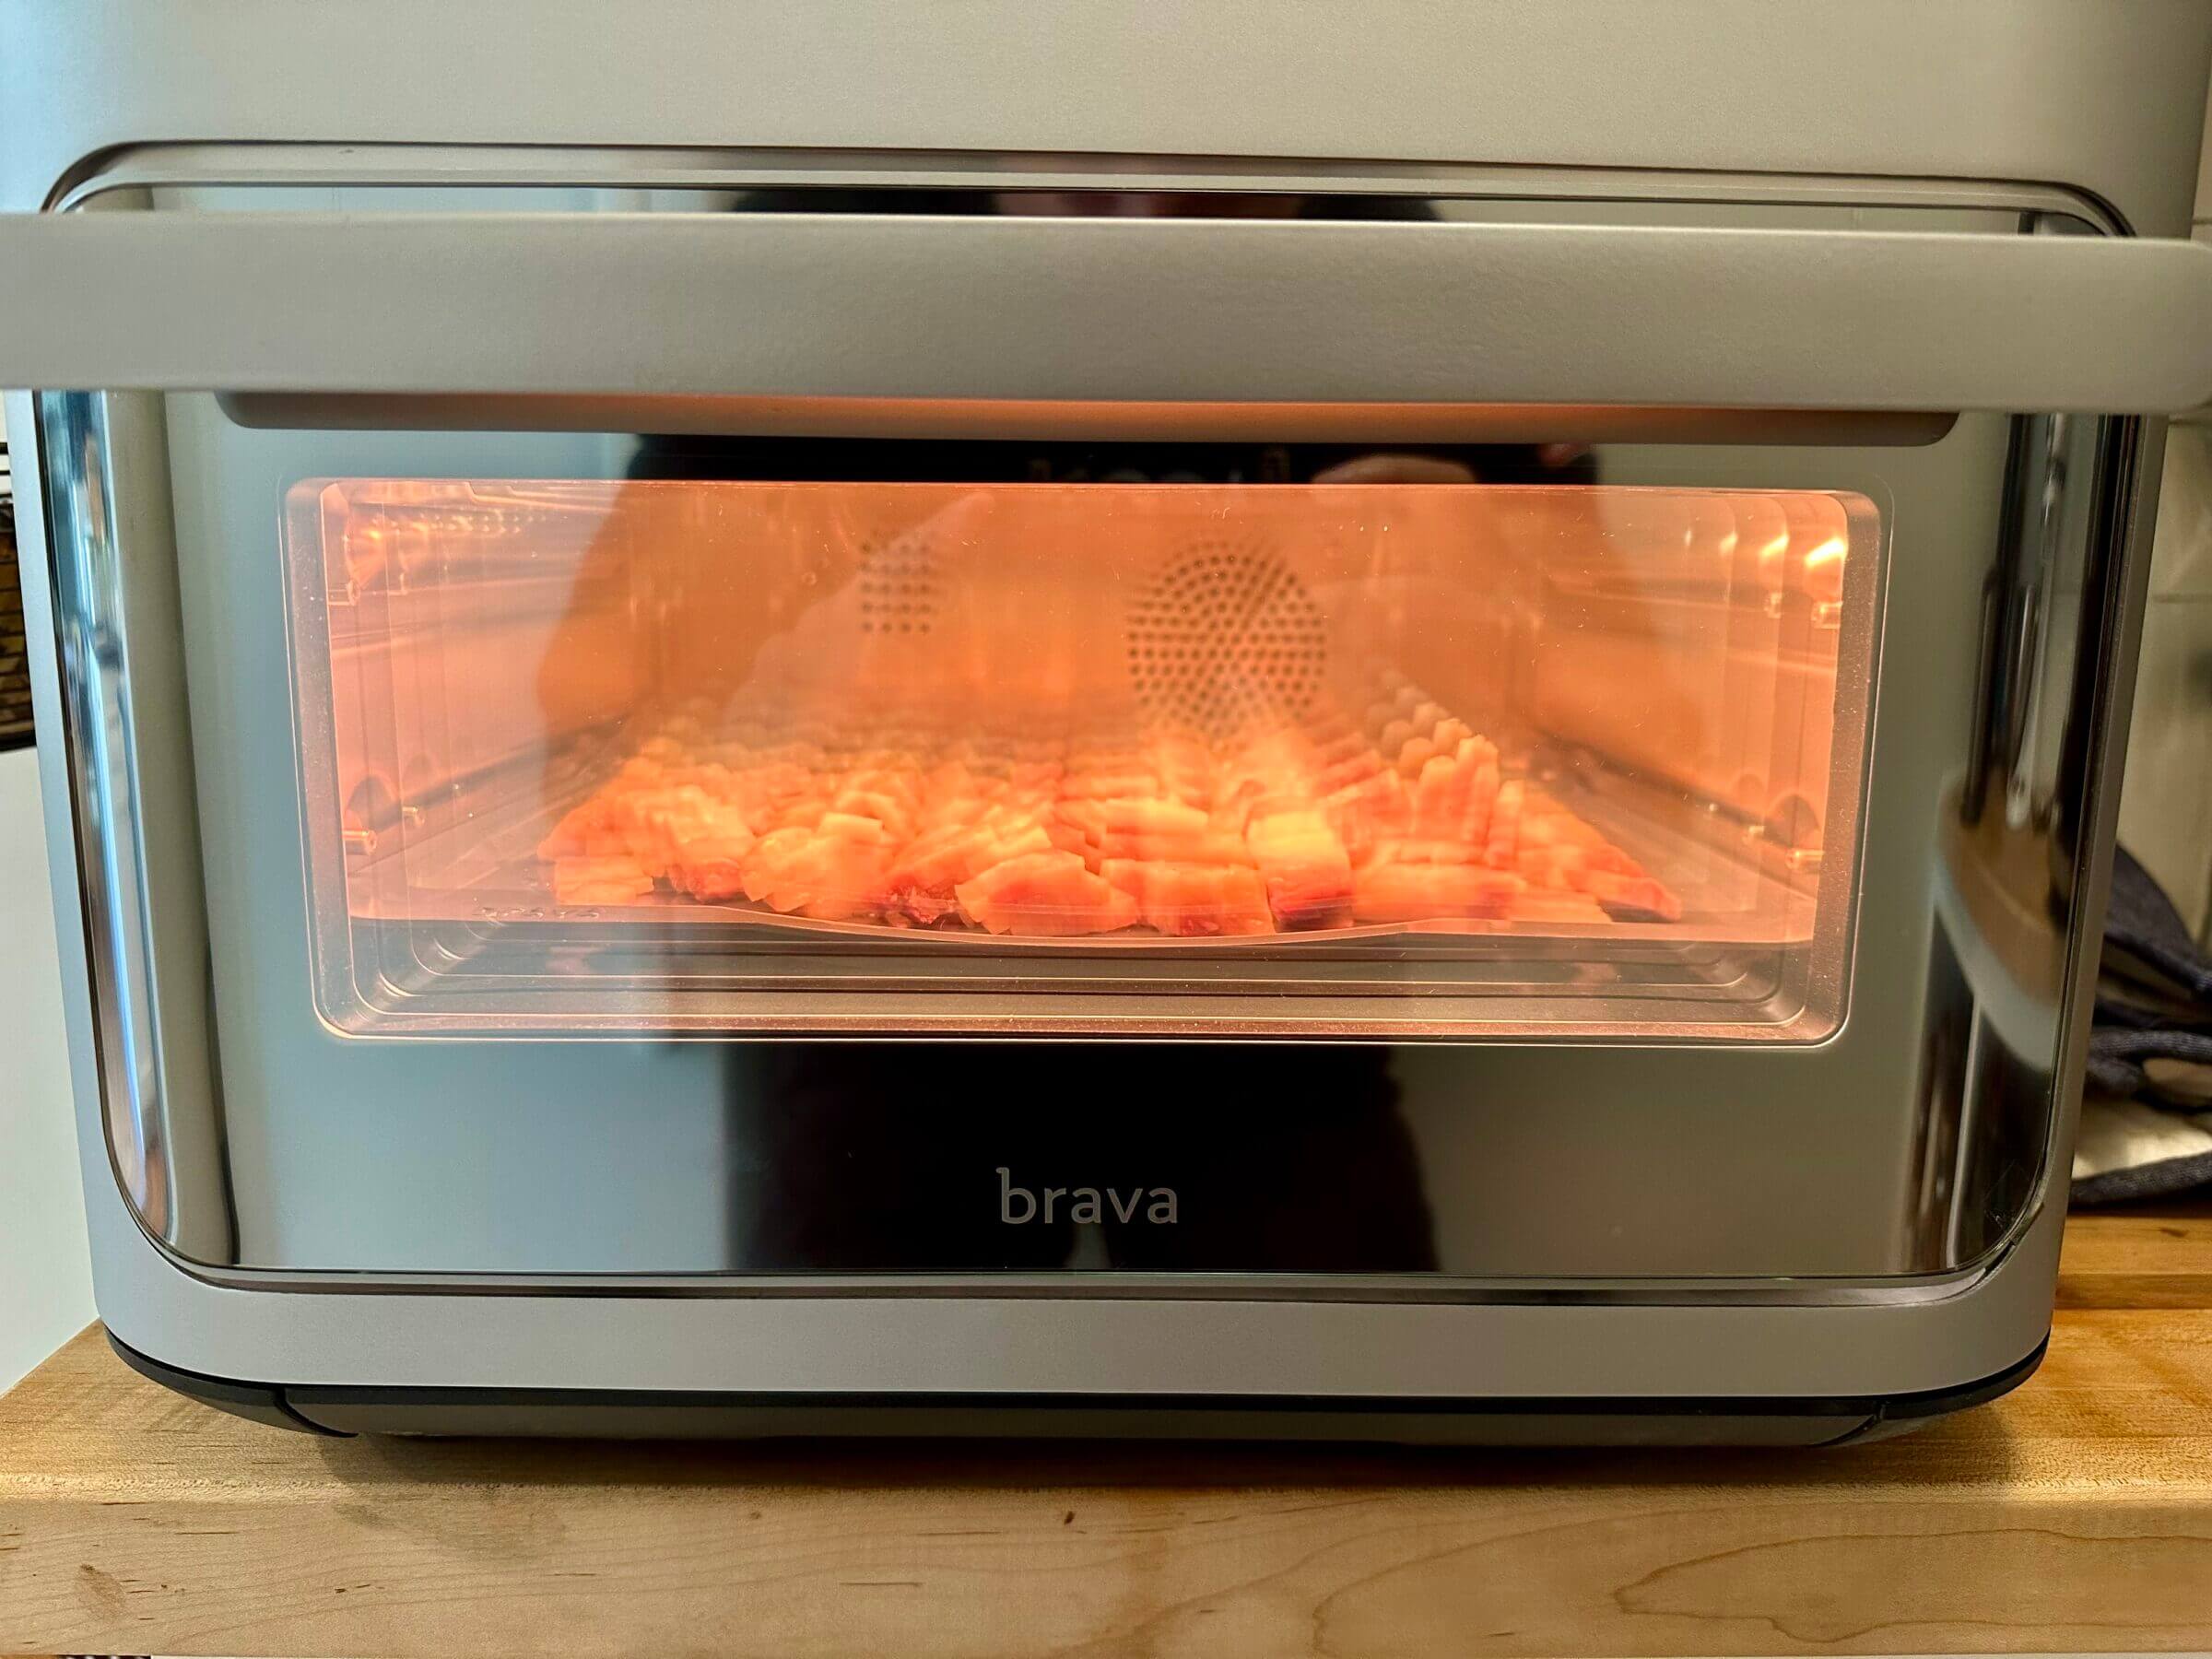 Brava Glass Oven Review